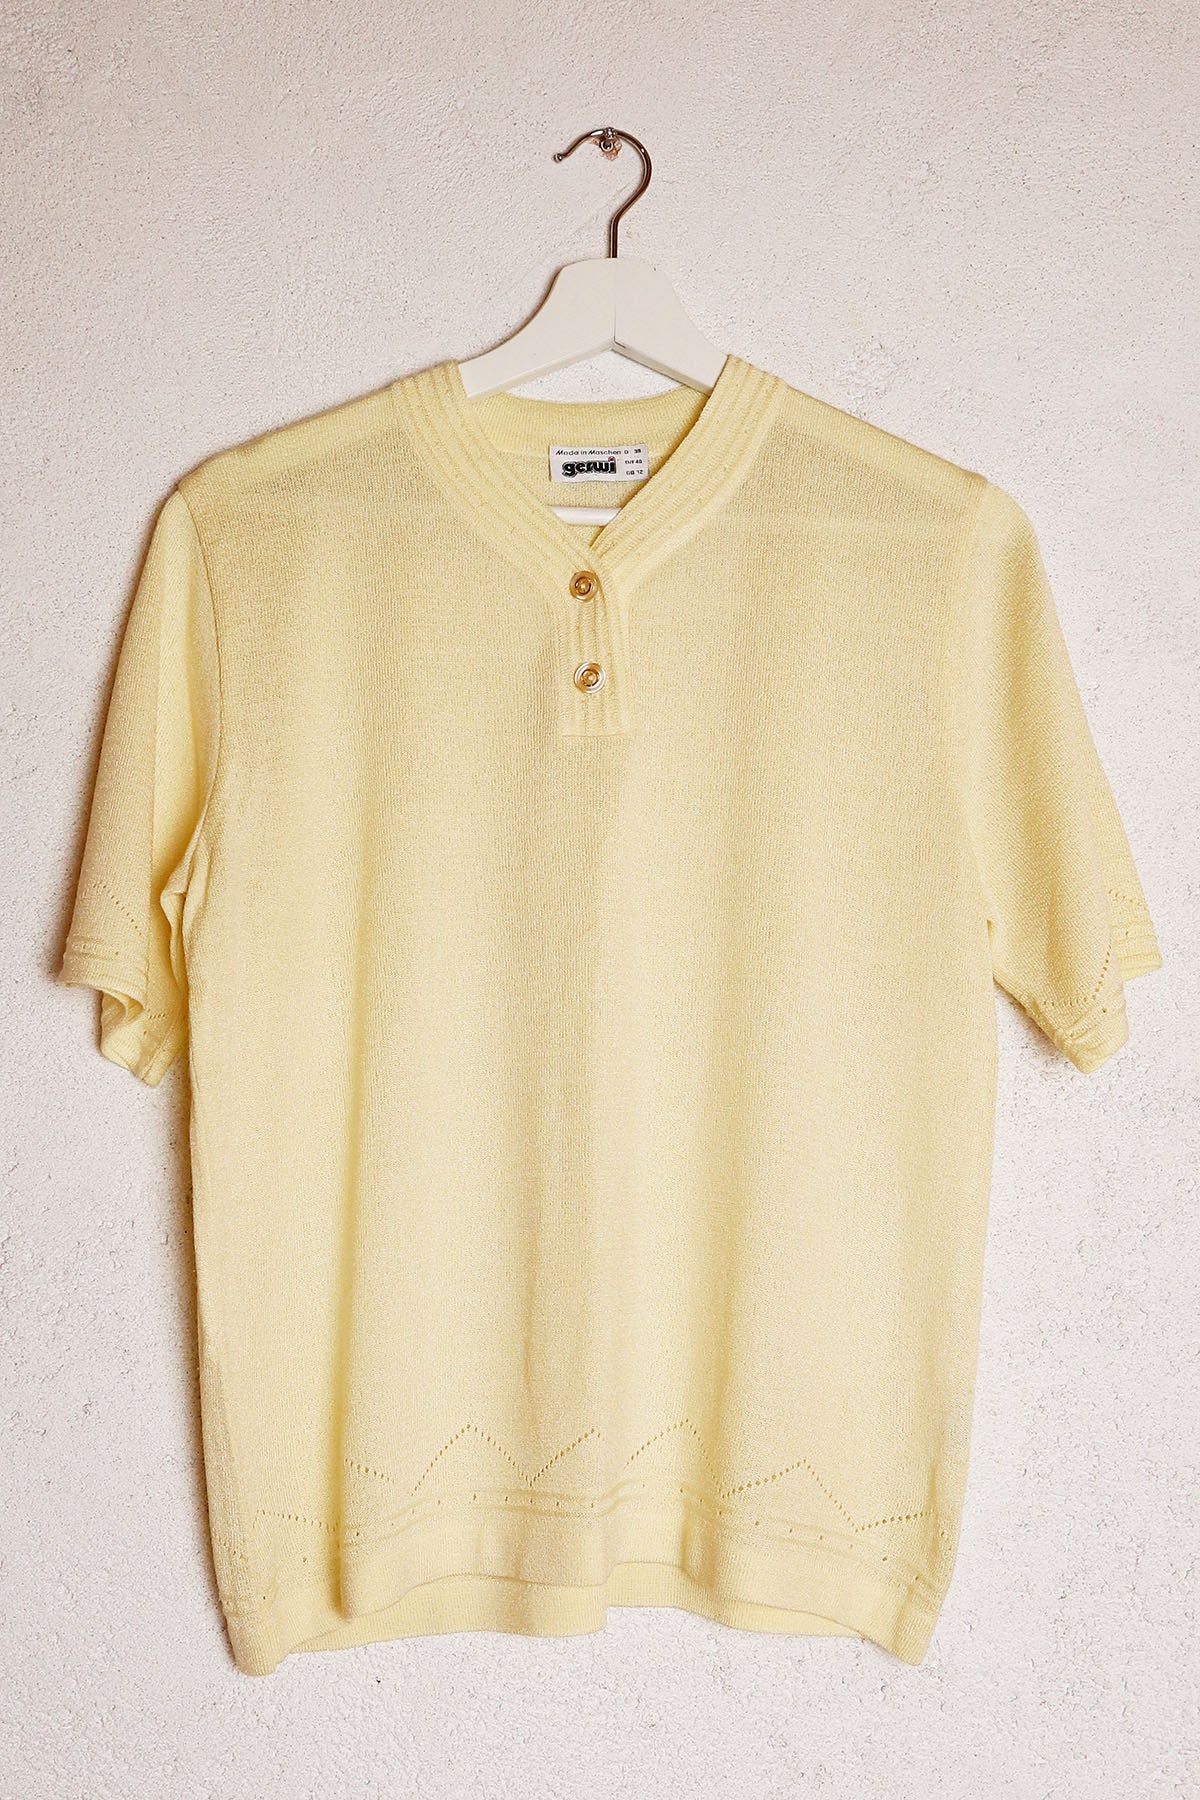 Shirt Vintage Pastell Gelb